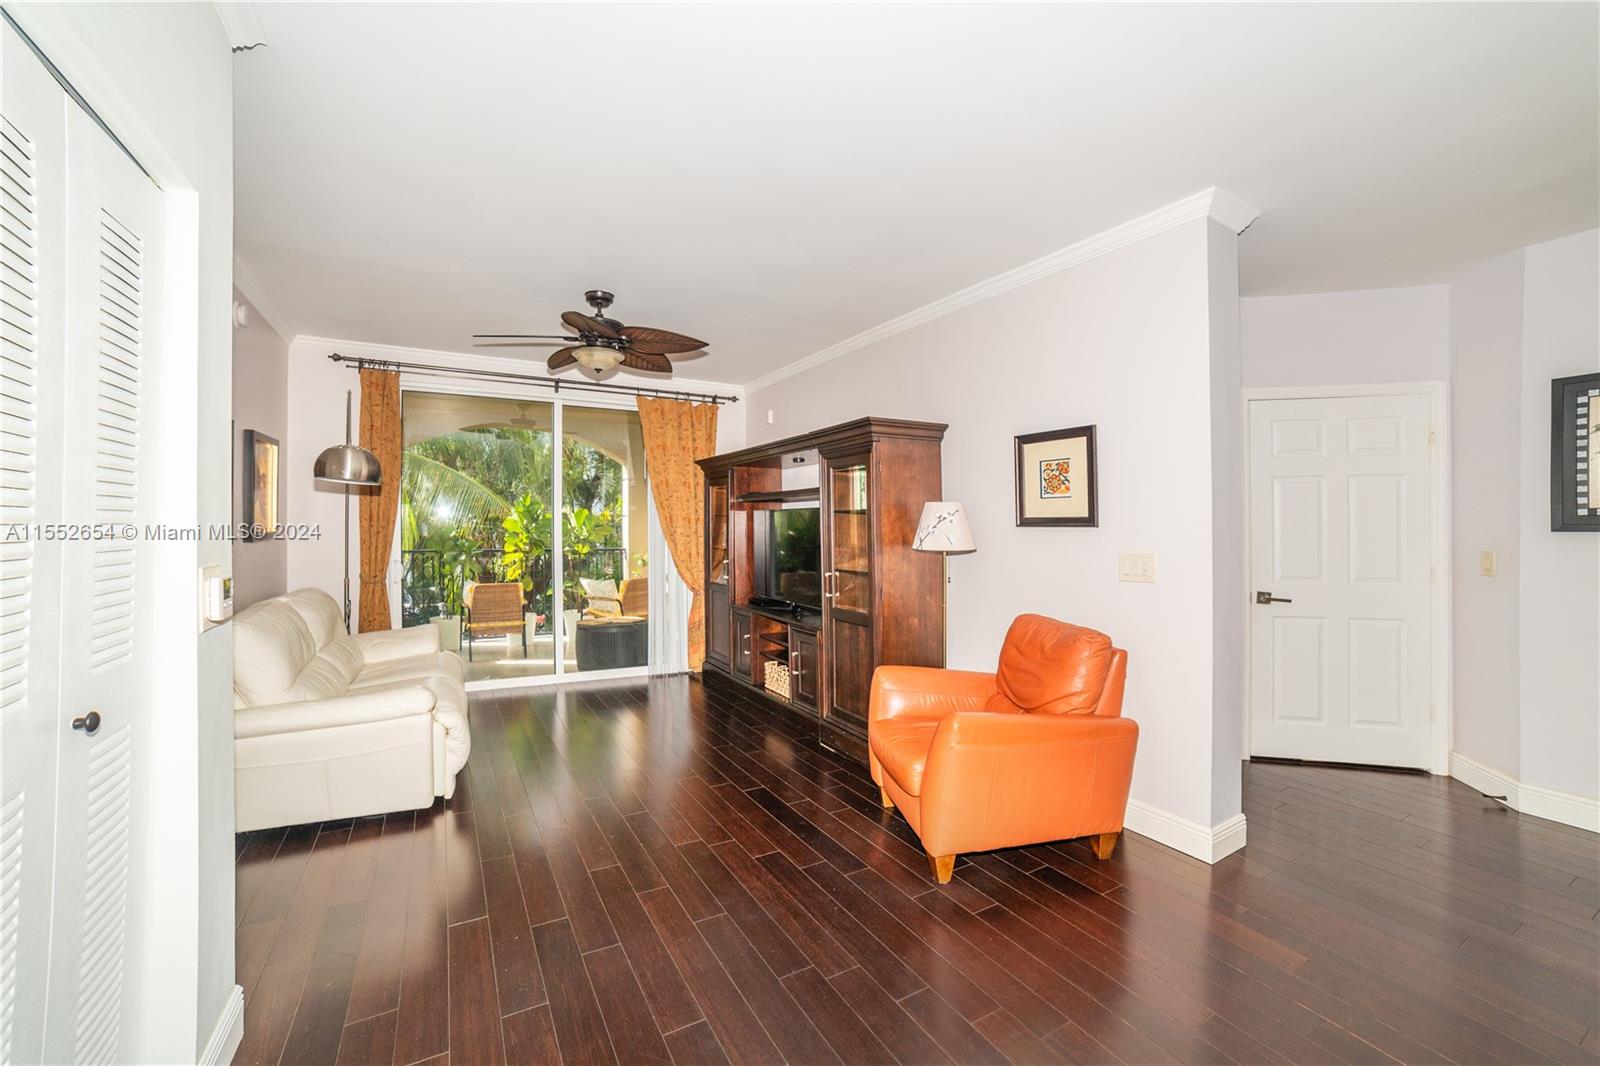 Rental Property at 17125 N Bay Rd Rd 3209, Sunny Isles Beach, Miami-Dade County, Florida - Bedrooms: 2 
Bathrooms: 2  - $2,750 MO.